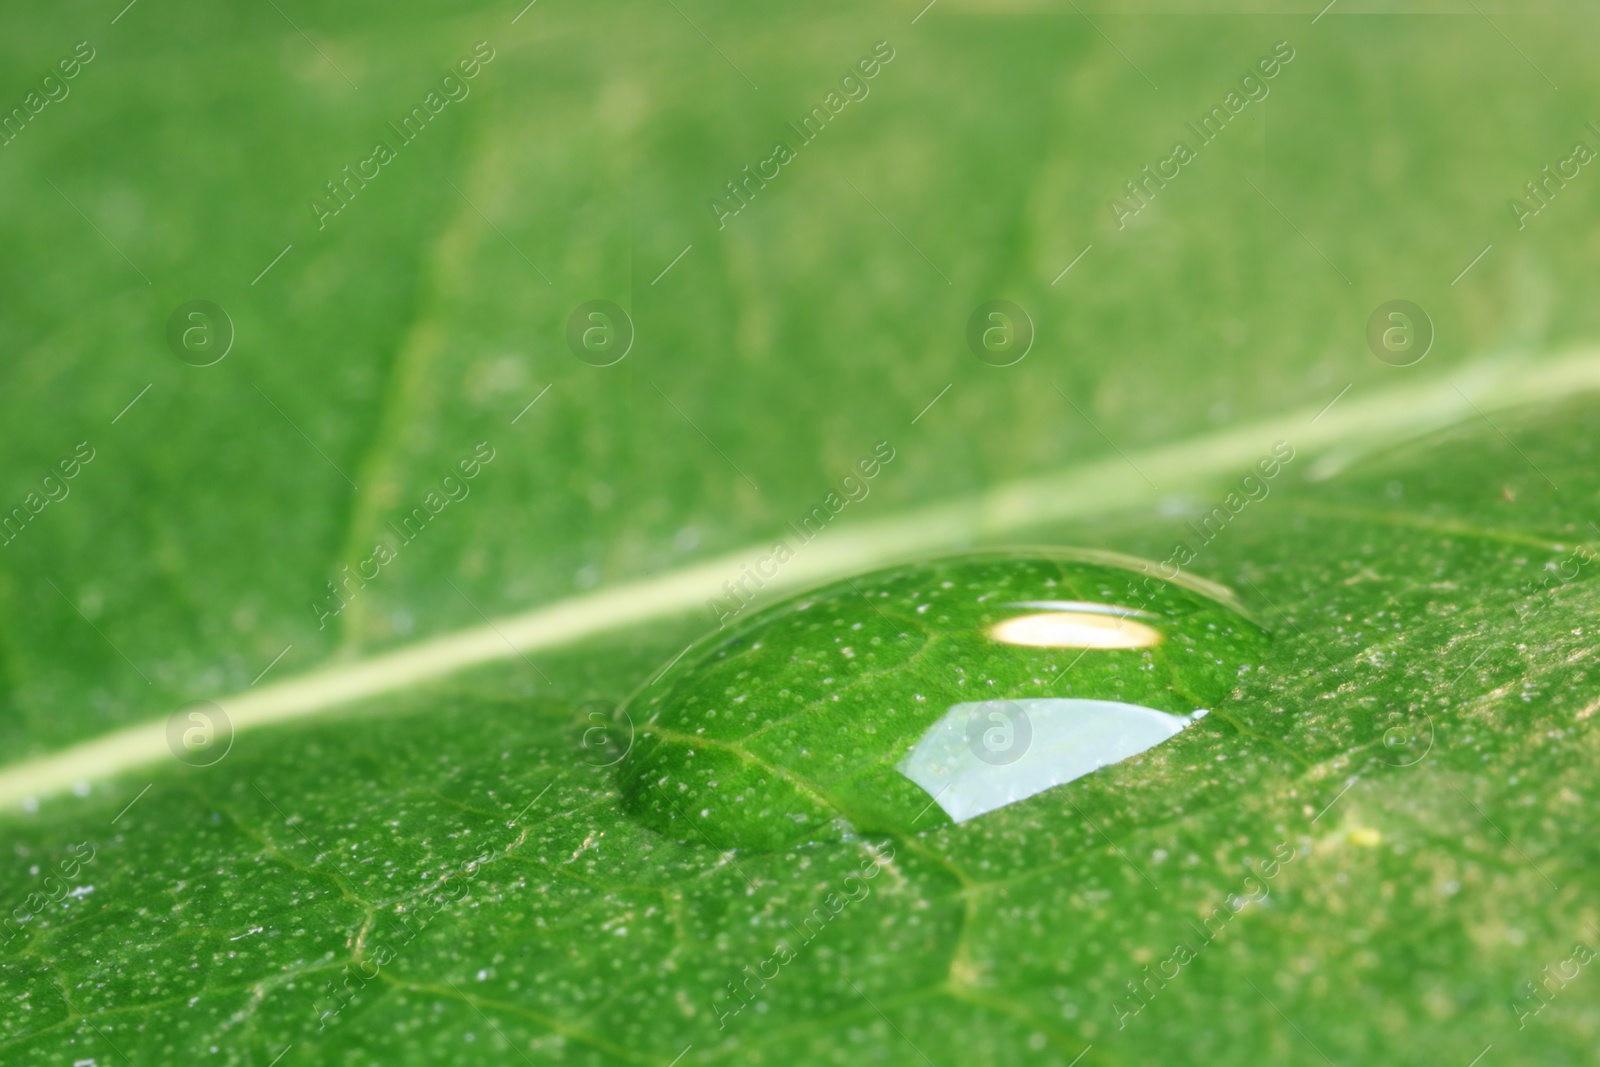 Photo of Water drop on green leaf, macro view